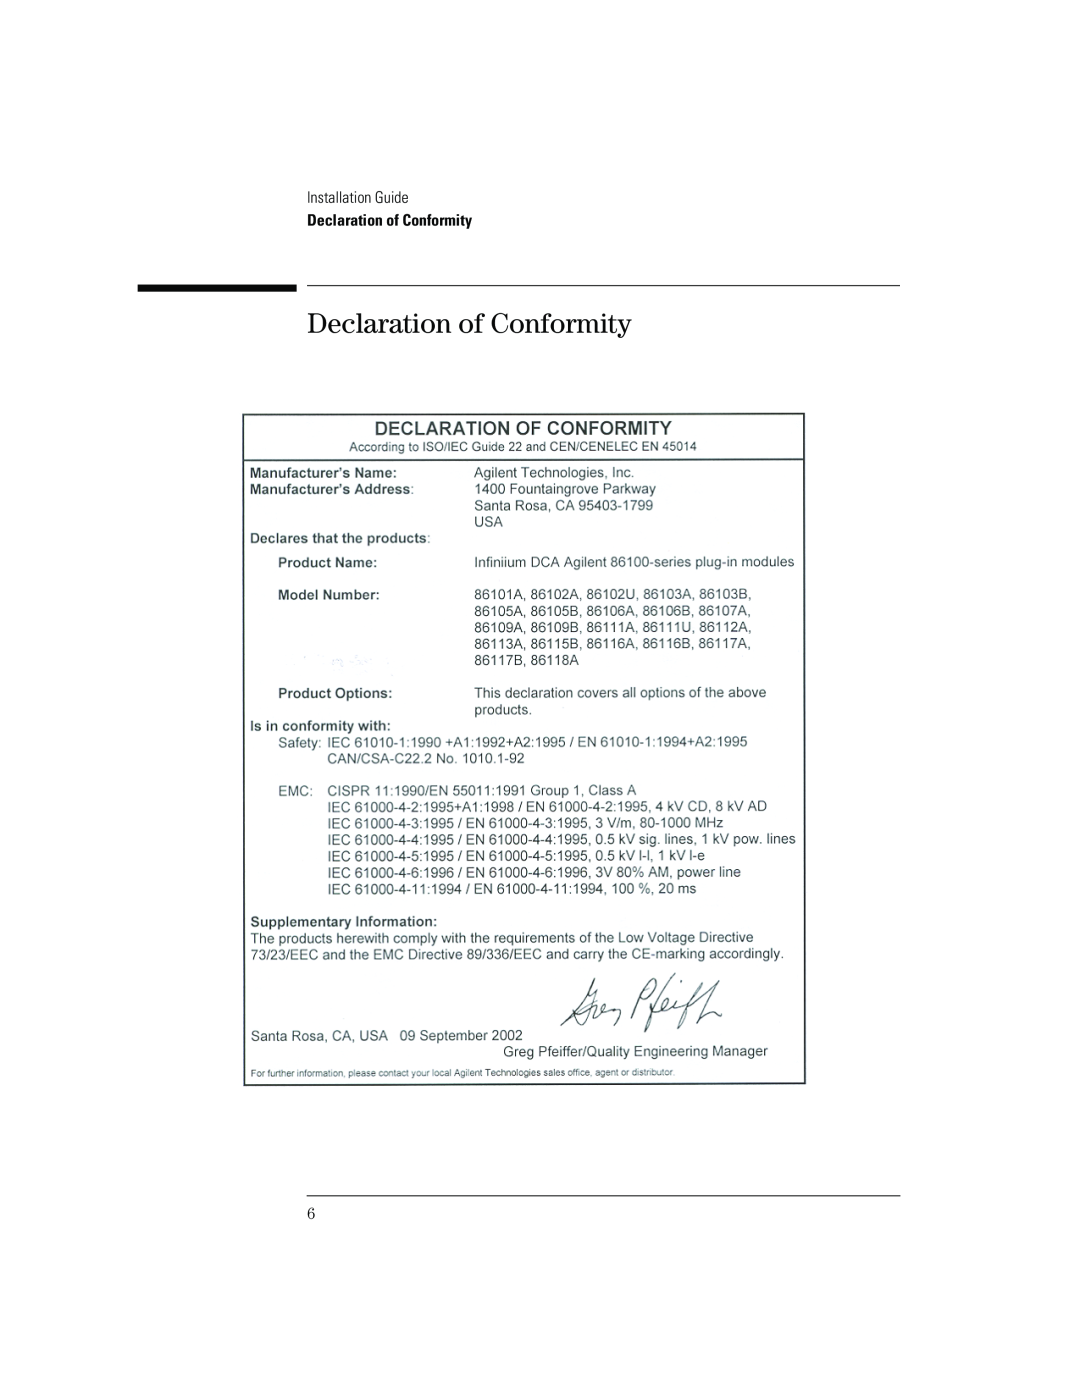 Agilent Technologies B, 86100A manual Declaration of Conformity, Installation Guide 